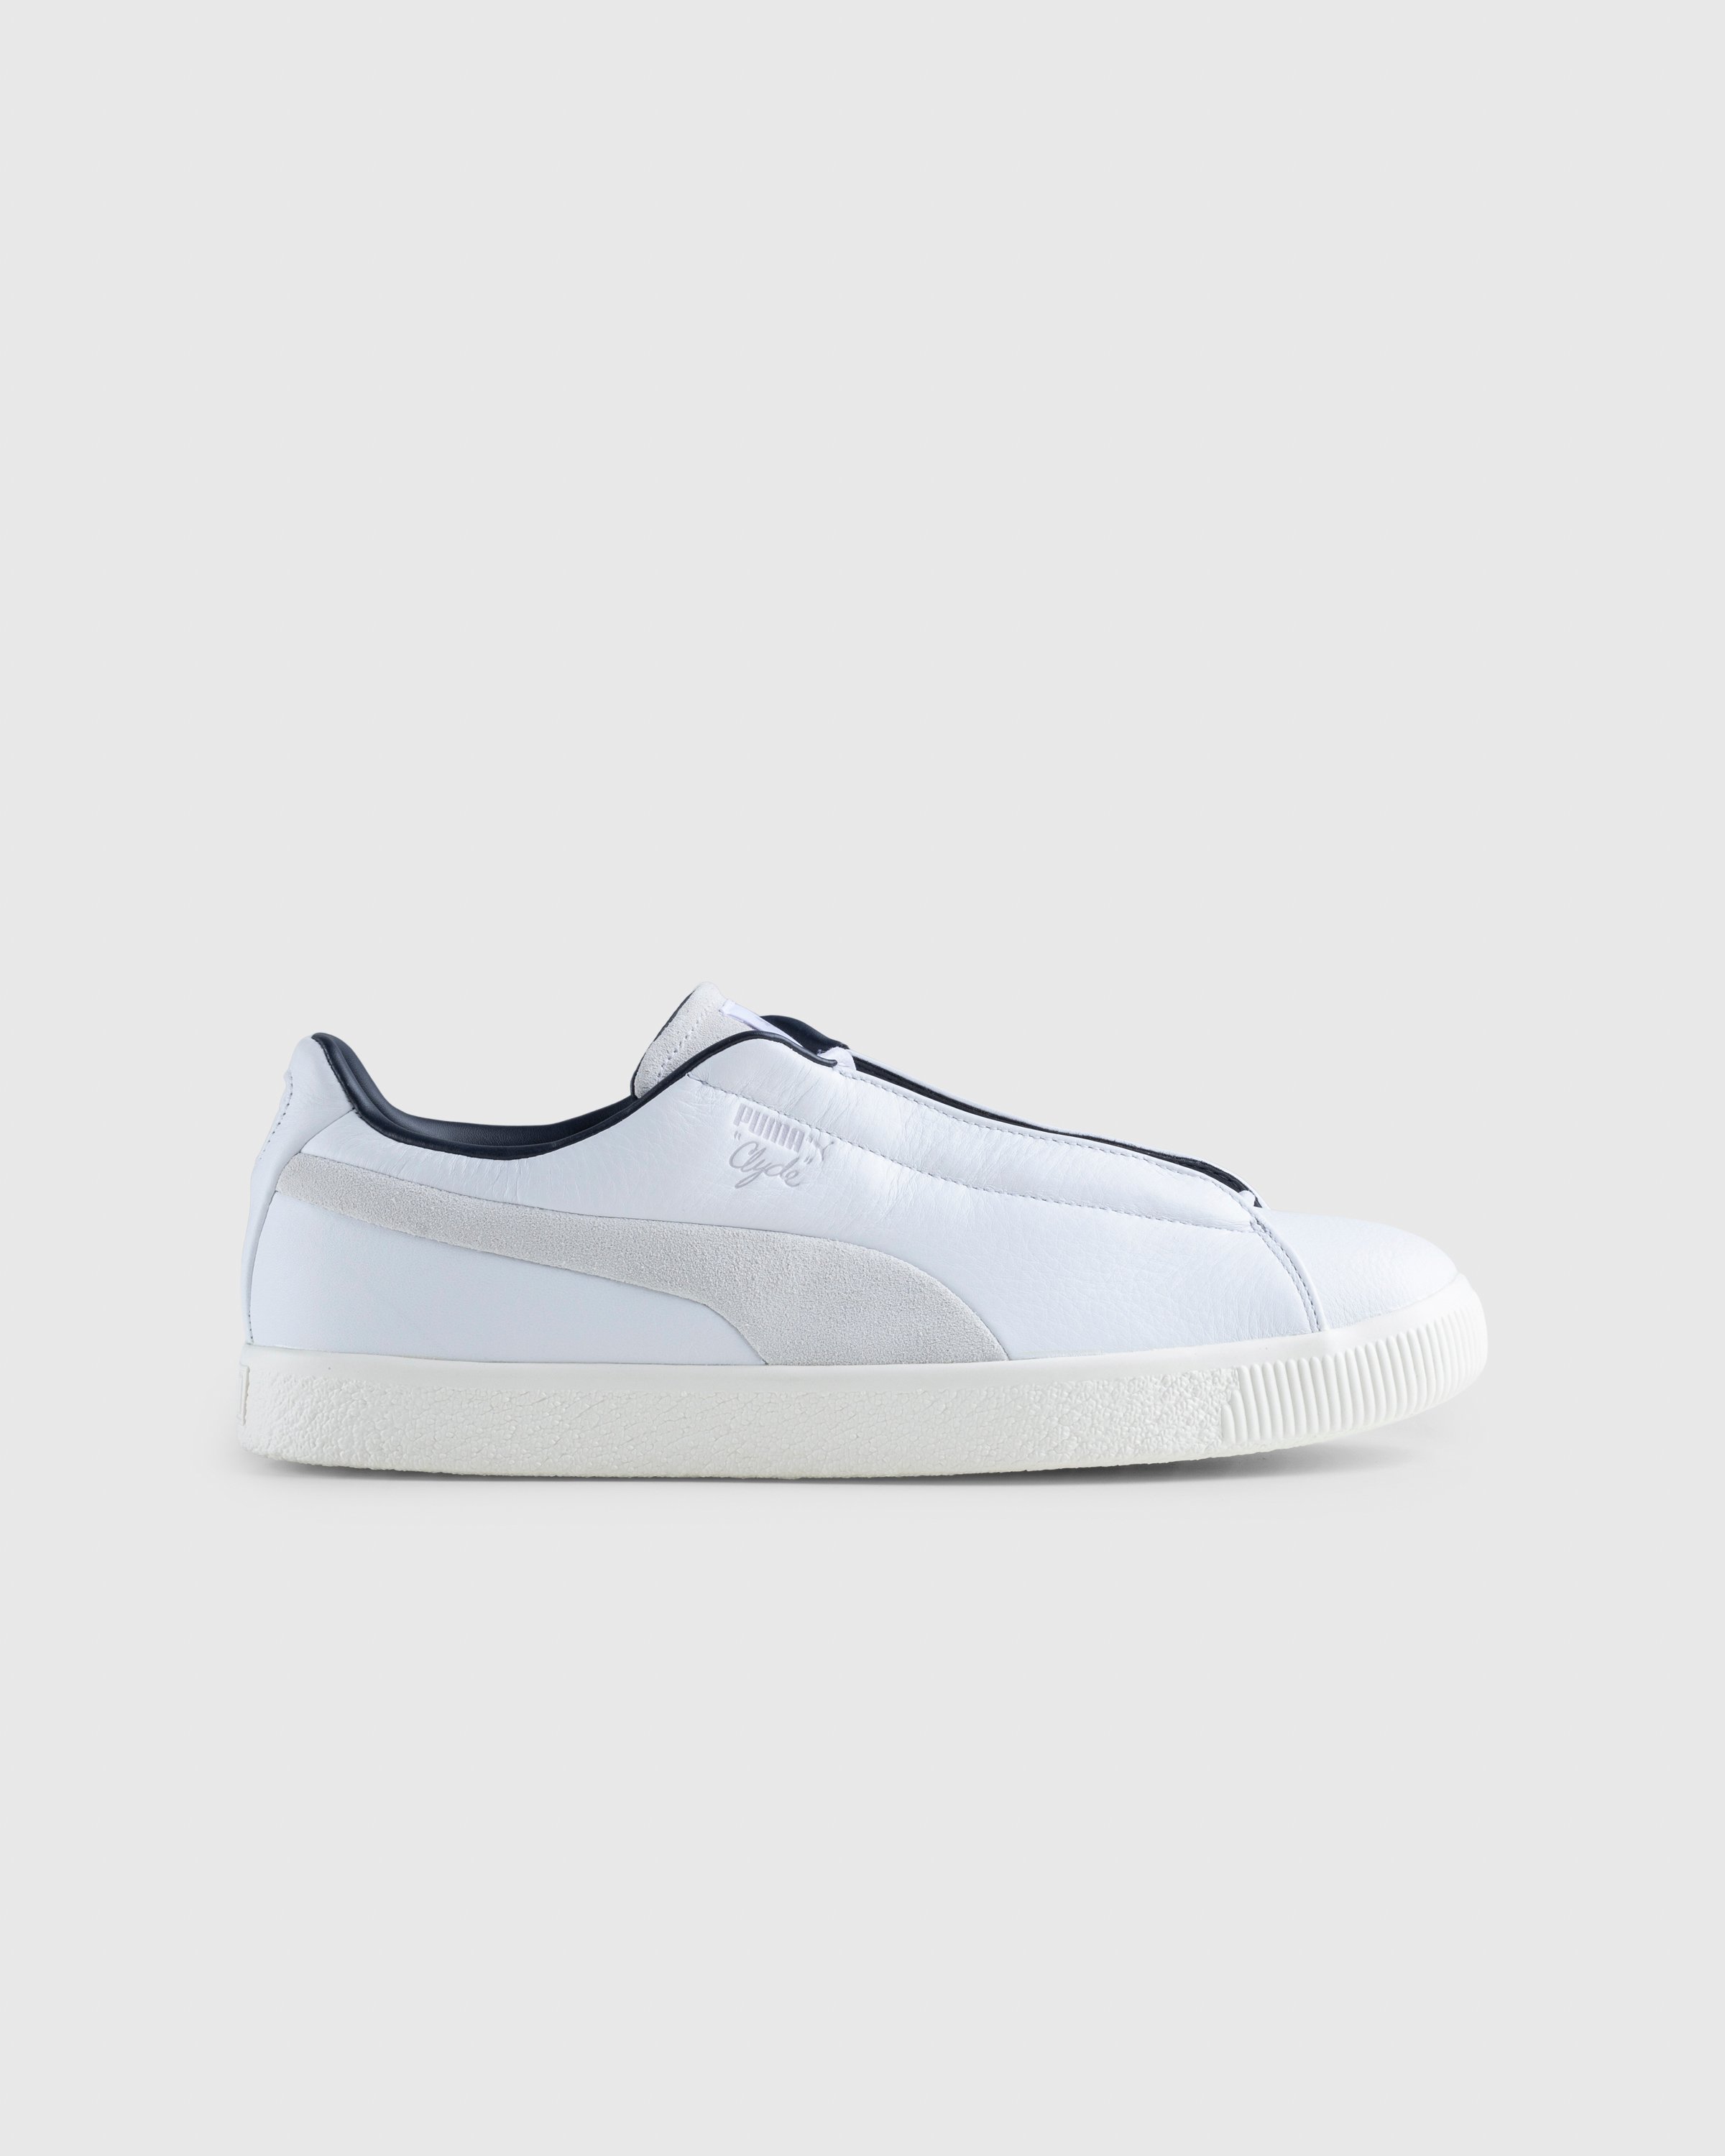 Puma x Nanamica - Clyde GORE-TEX White - Footwear - White - Image 1